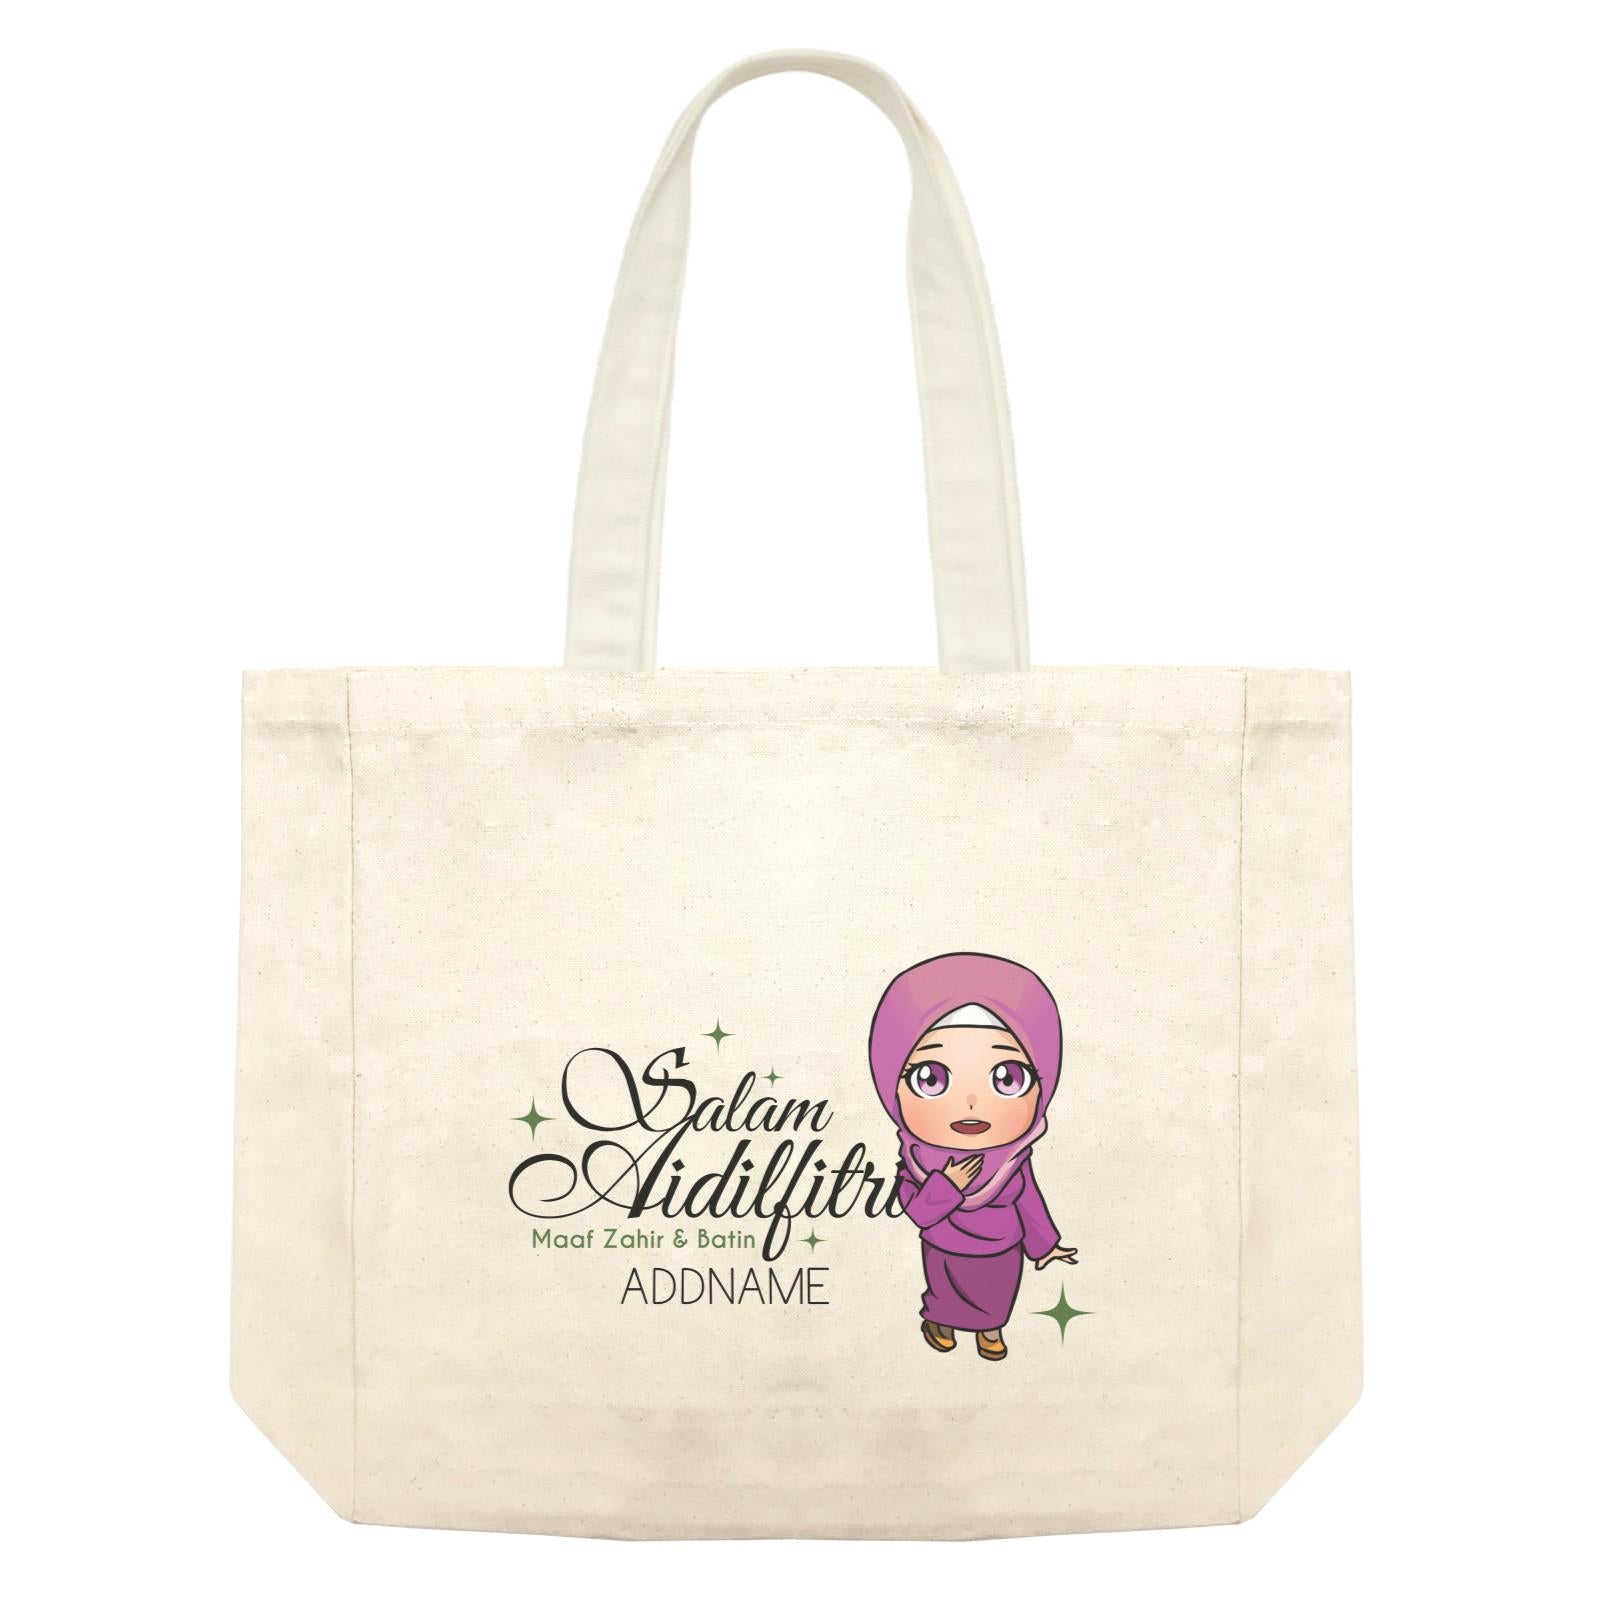 Raya Chibi Wishes Woman Addname Wishes Everyone Salam Aidilfitri Maaf Zahir & Batin Accessories Shopping Bag